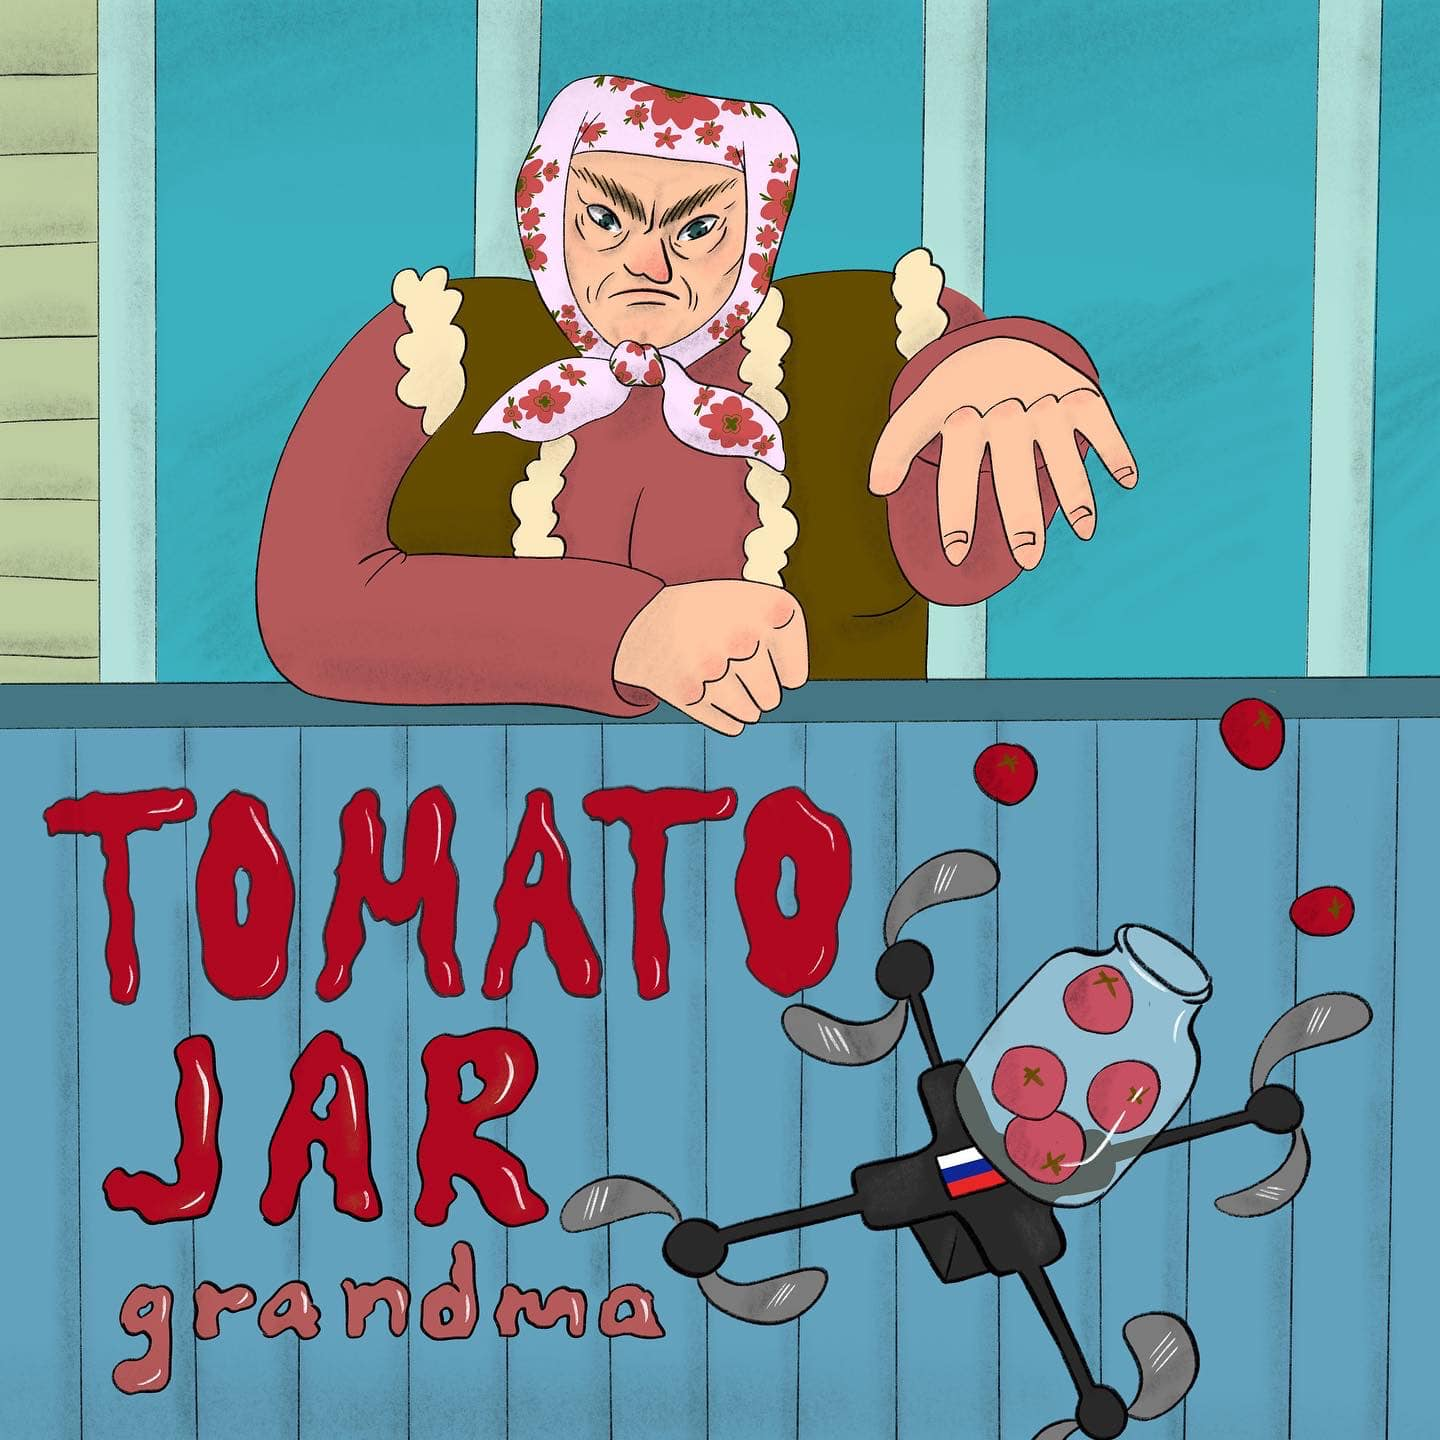 Ukrainian grandma throwing a tomato jar